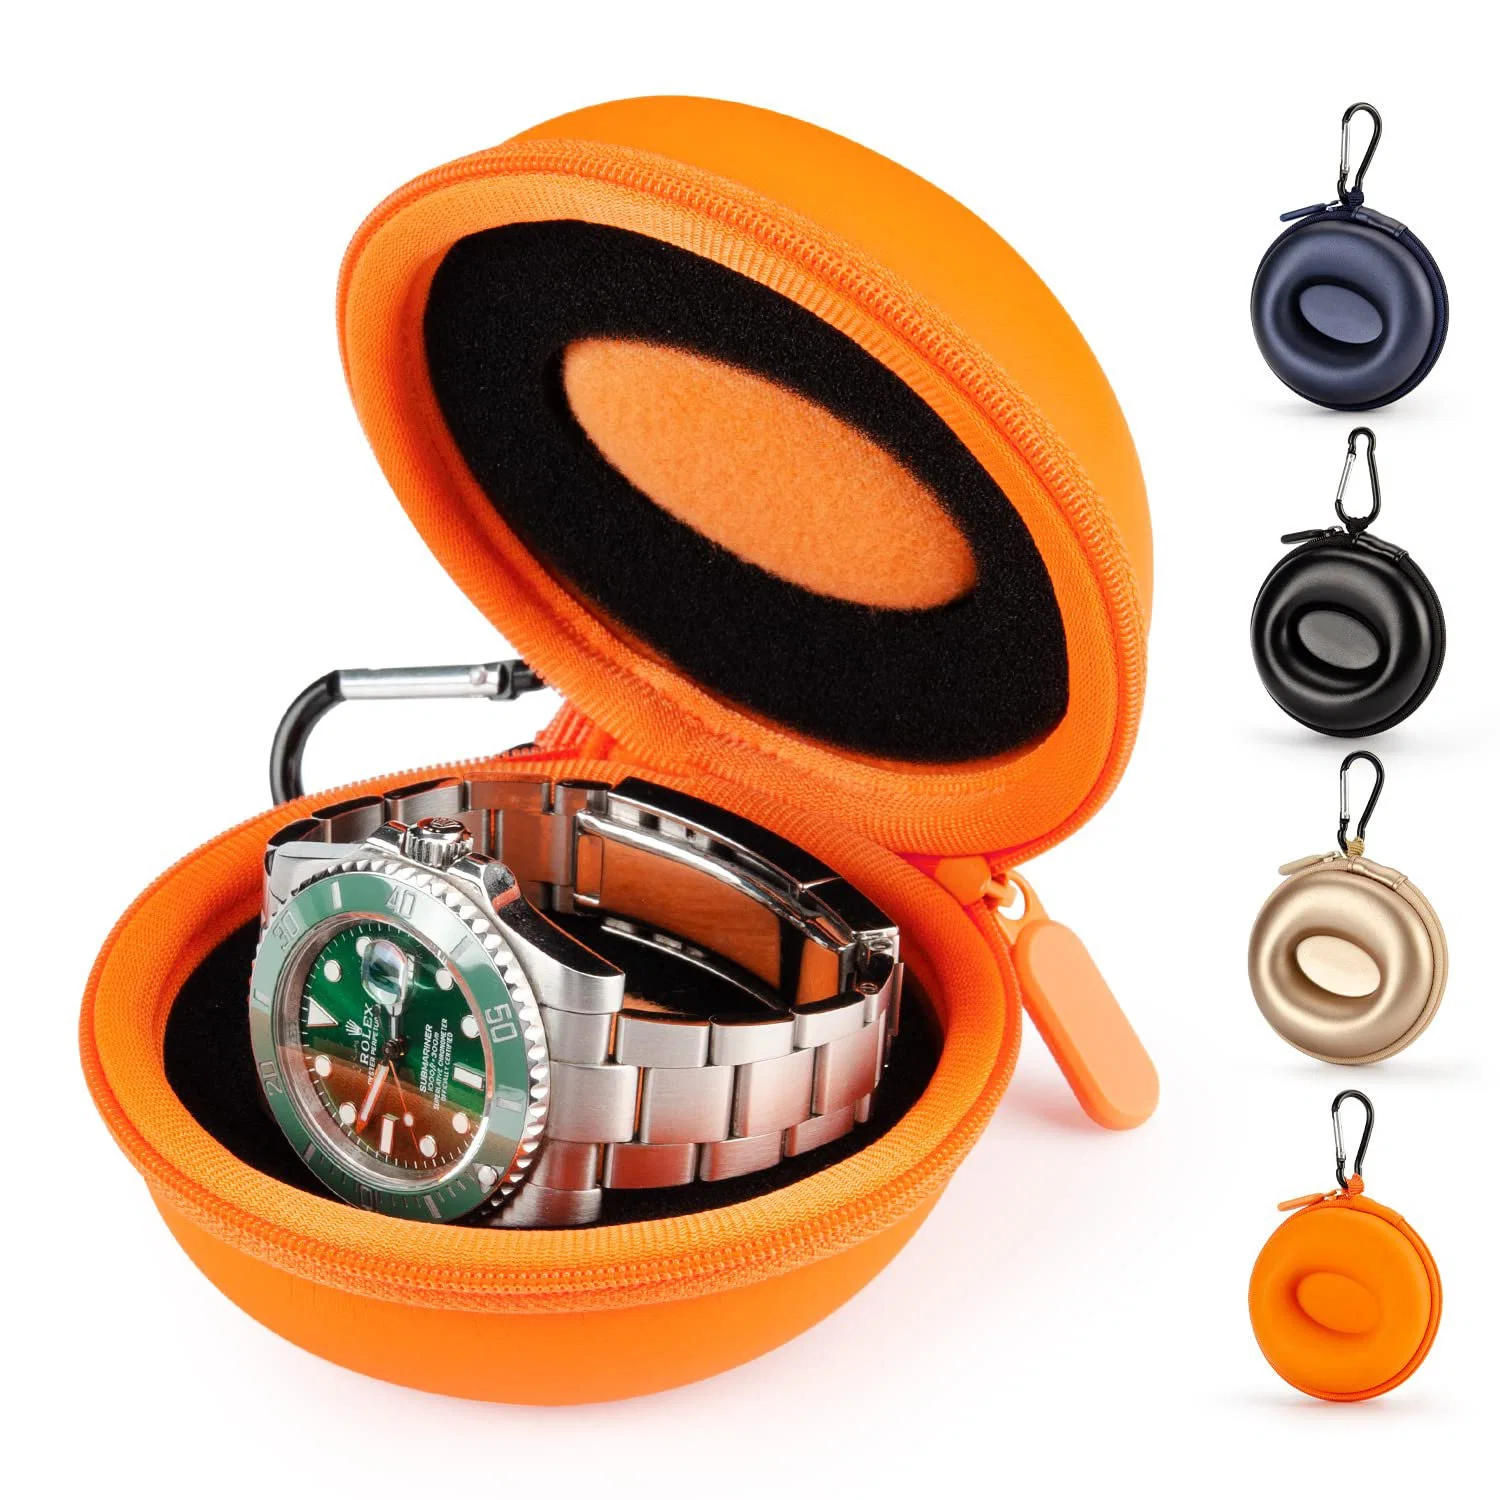 Watch Travel Case for Women: Portable Single Watch Box Organizer Travel Wristwatches Case